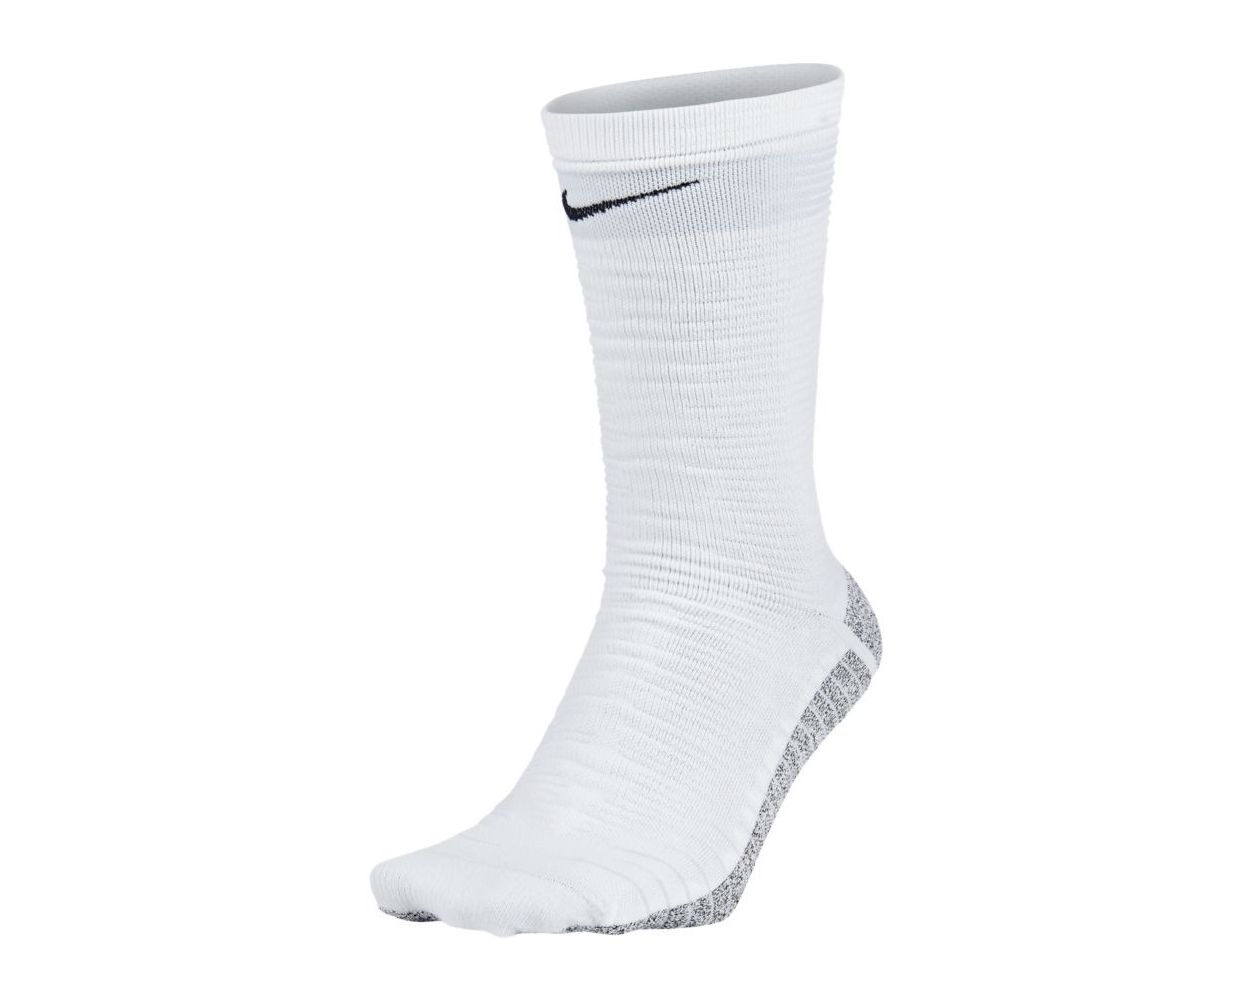 Socks Nike Grip Strike Crew   - Football boots & equipment